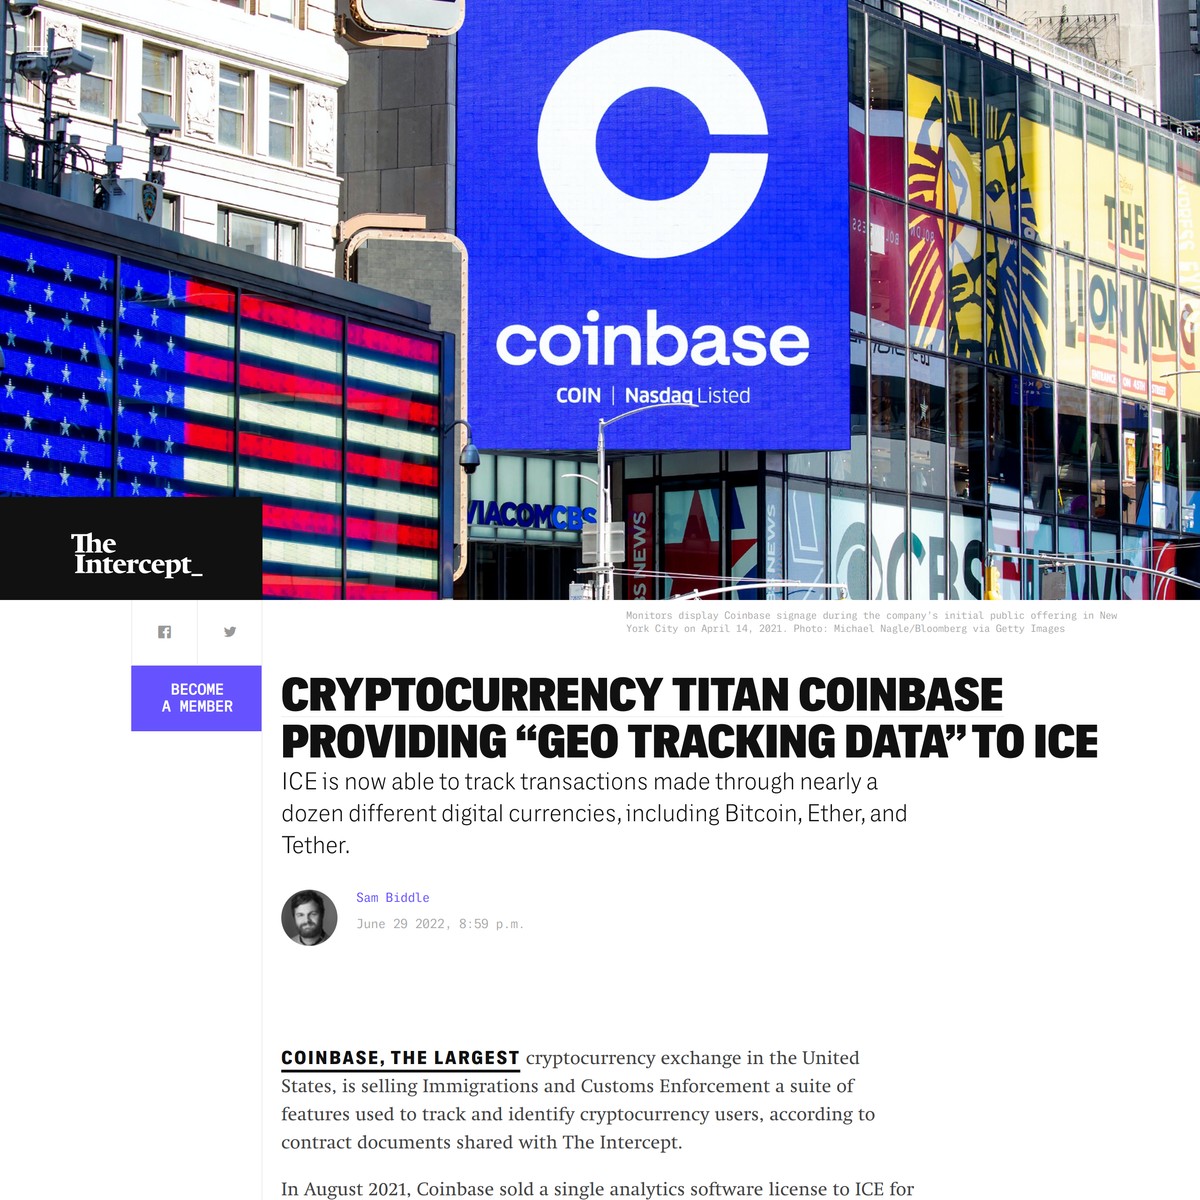 titan coinbase providing geo tracking data